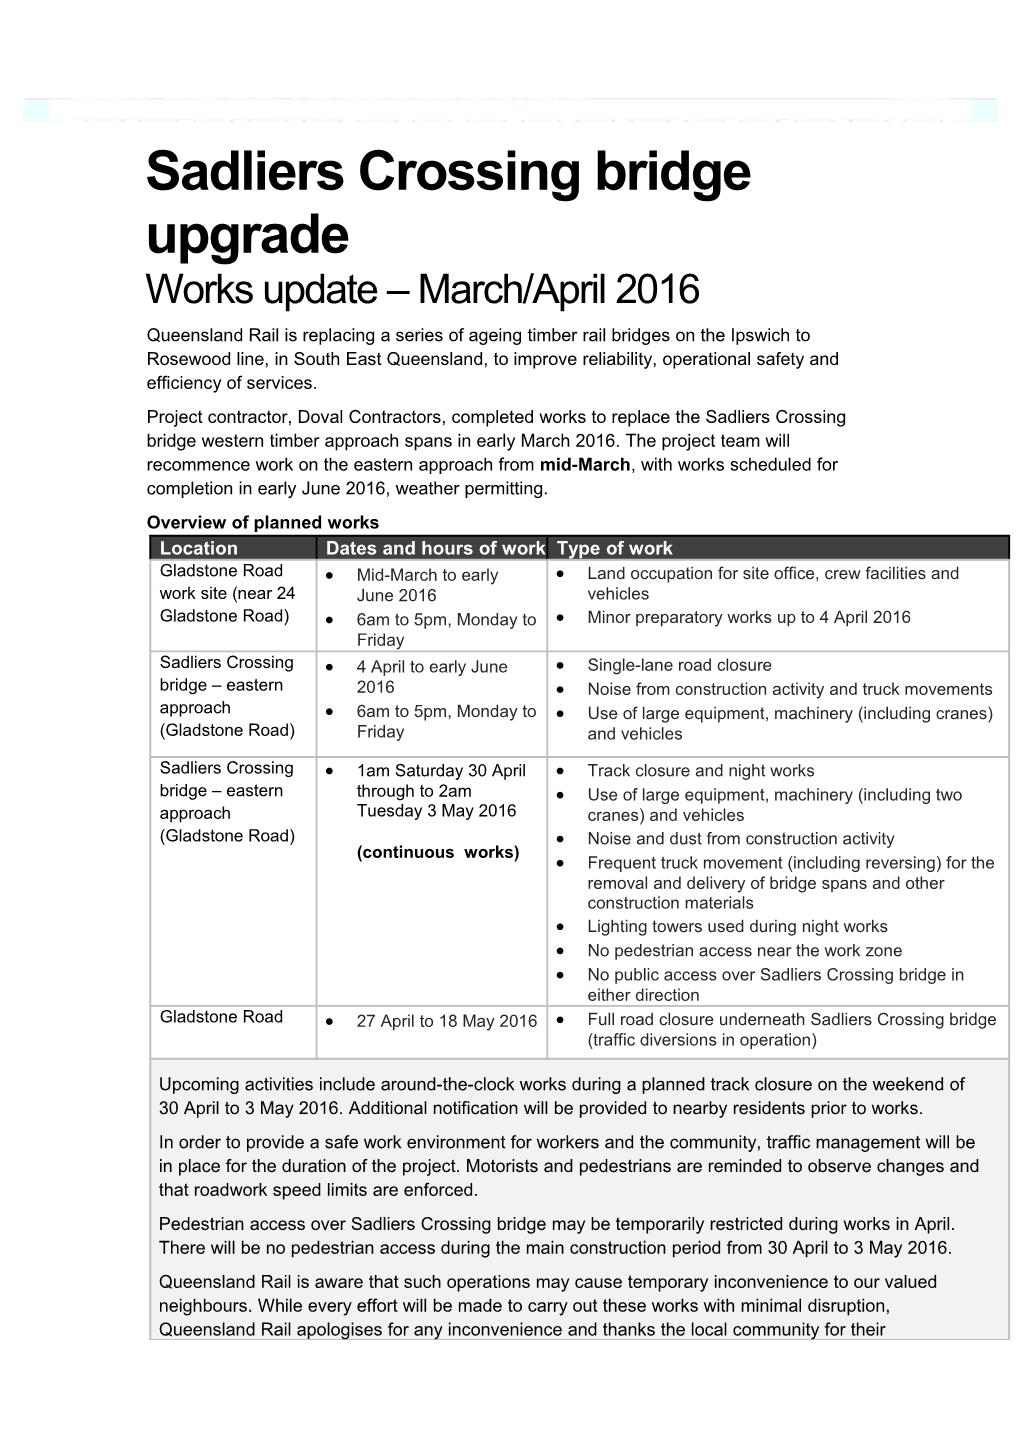 Works Notice 15 Sadliers Mar/Apr 2016